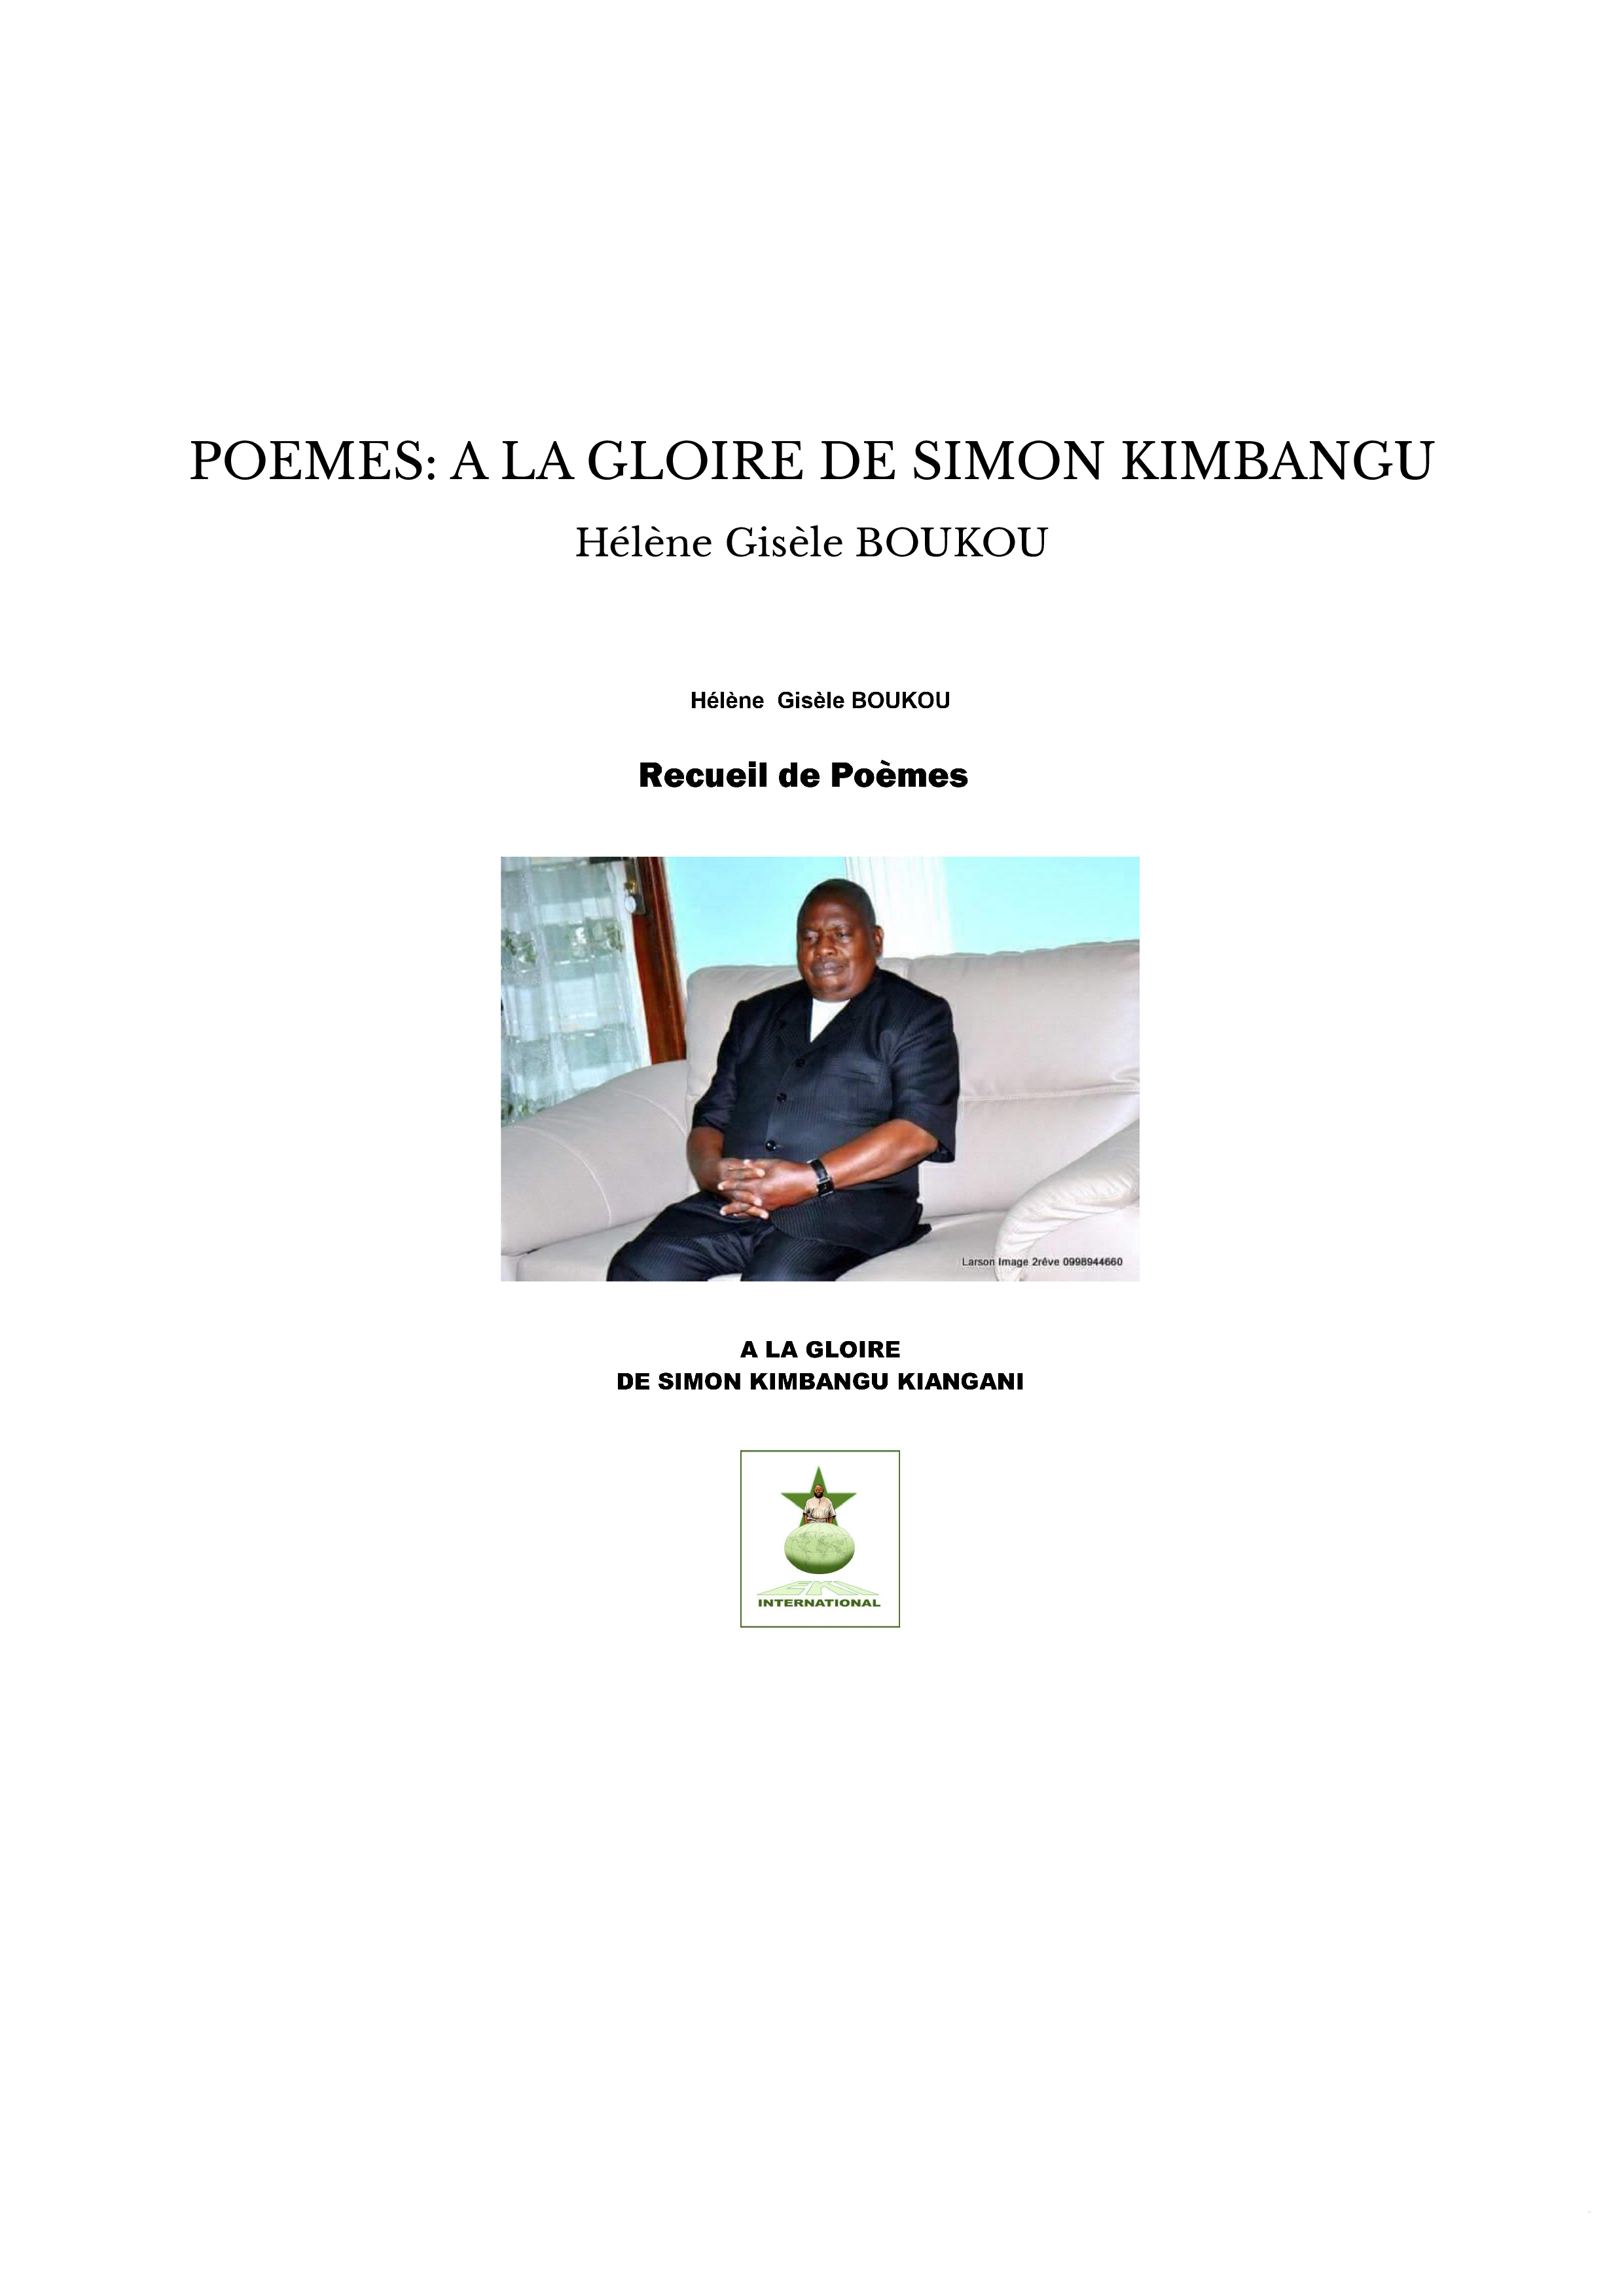 POEMES: A LA GLOIRE DE SIMON KIMBANGU